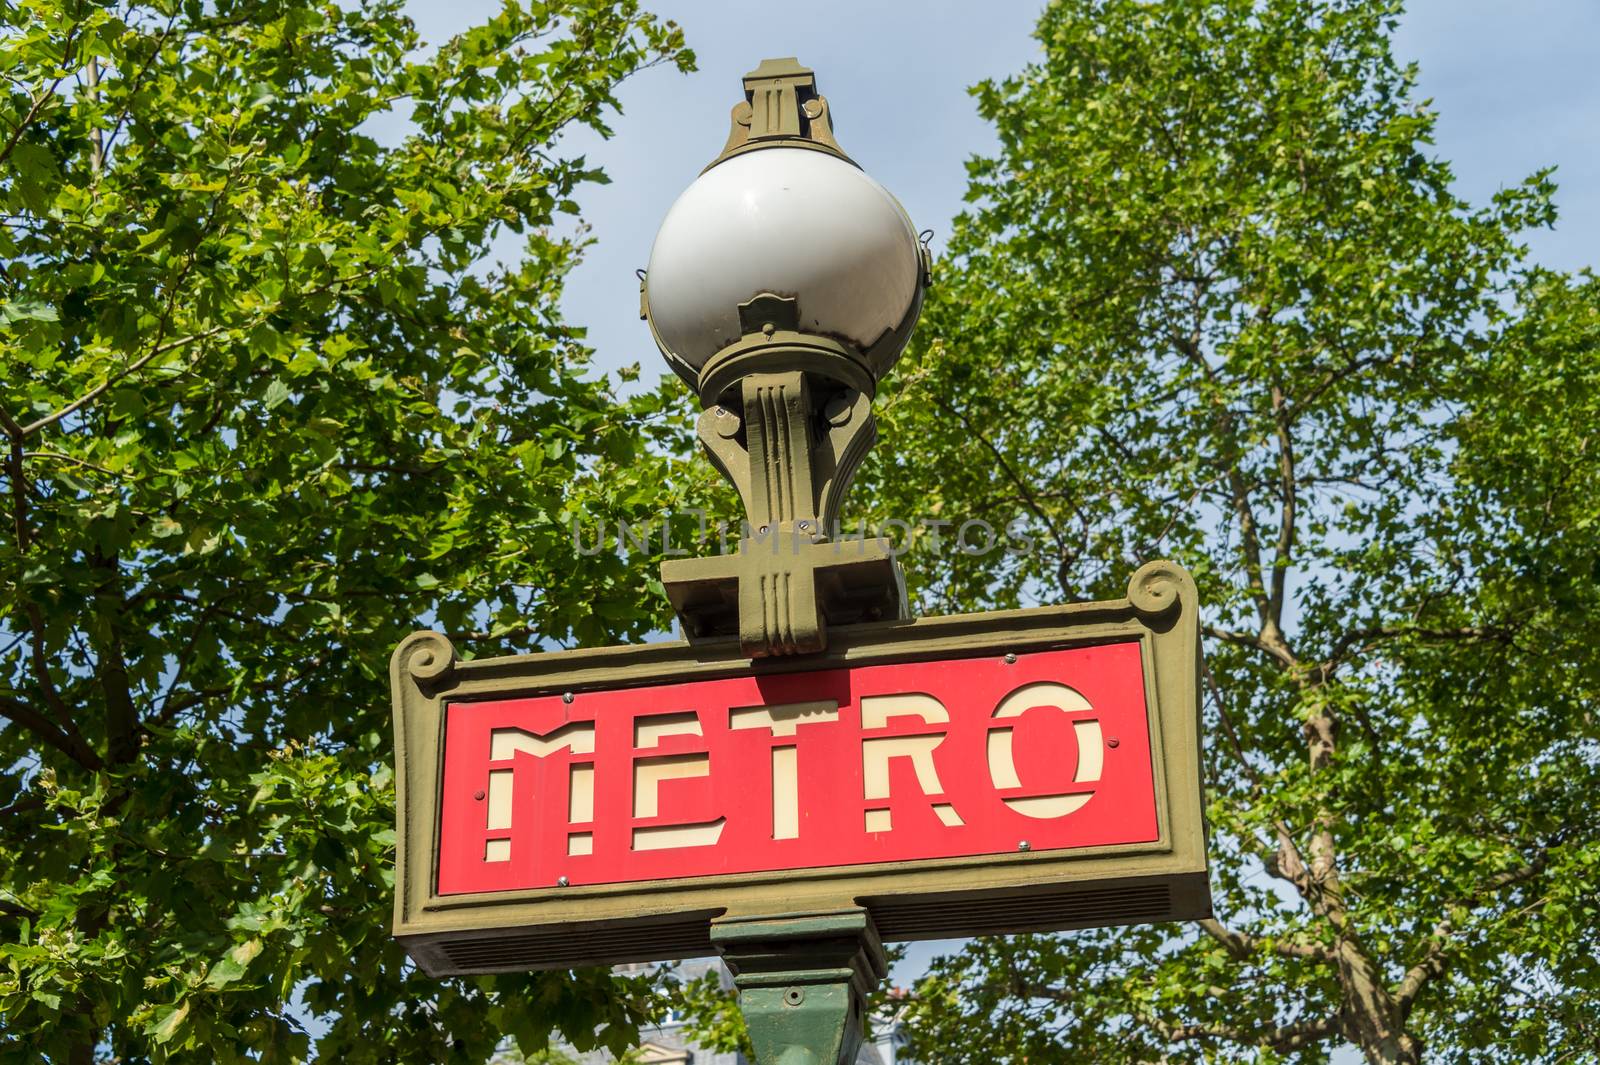 Metro subway entry sign in Paris